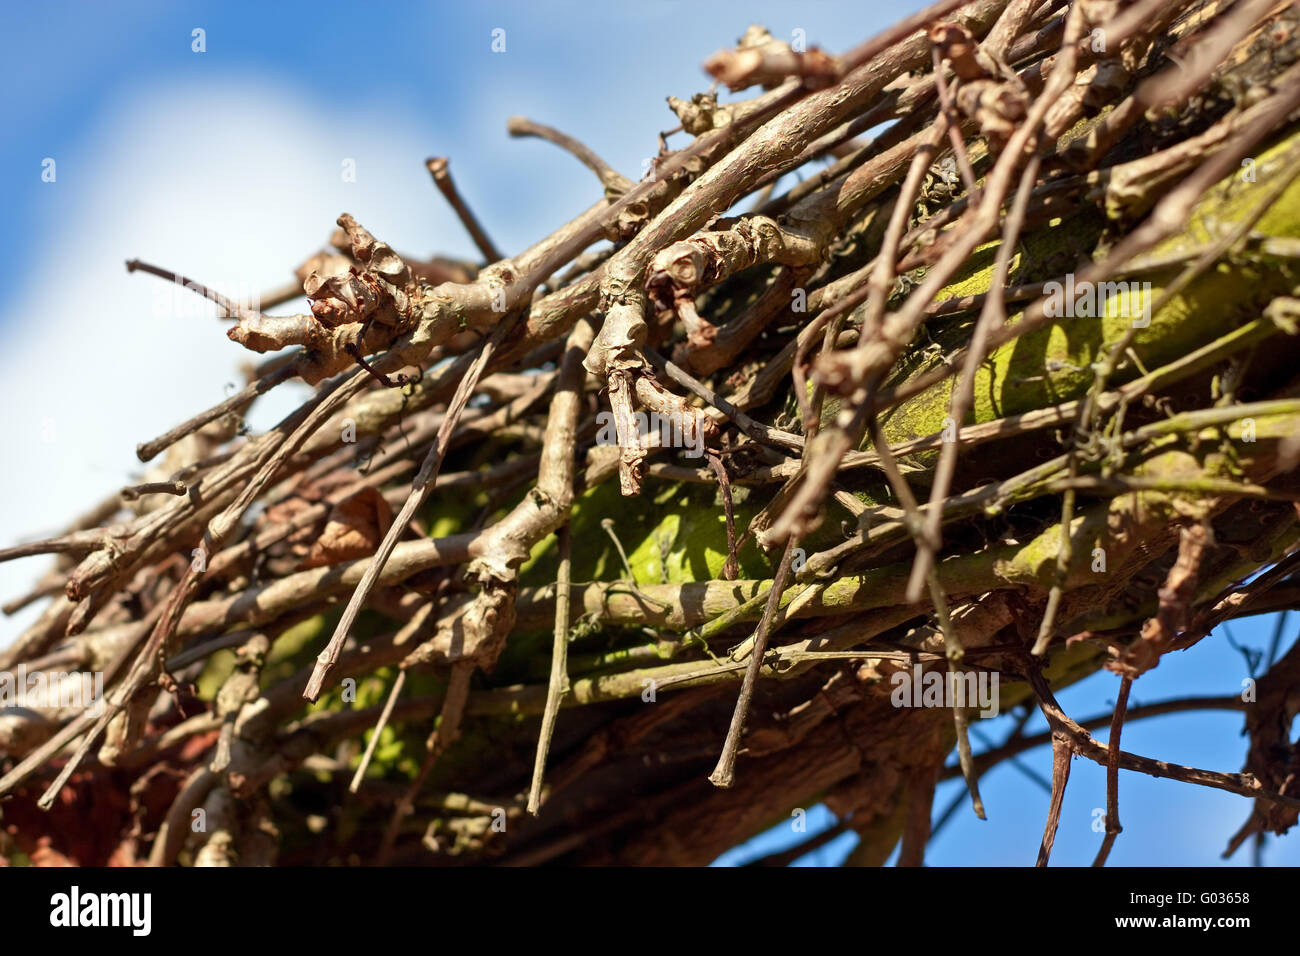 vine on wood Stock Photo